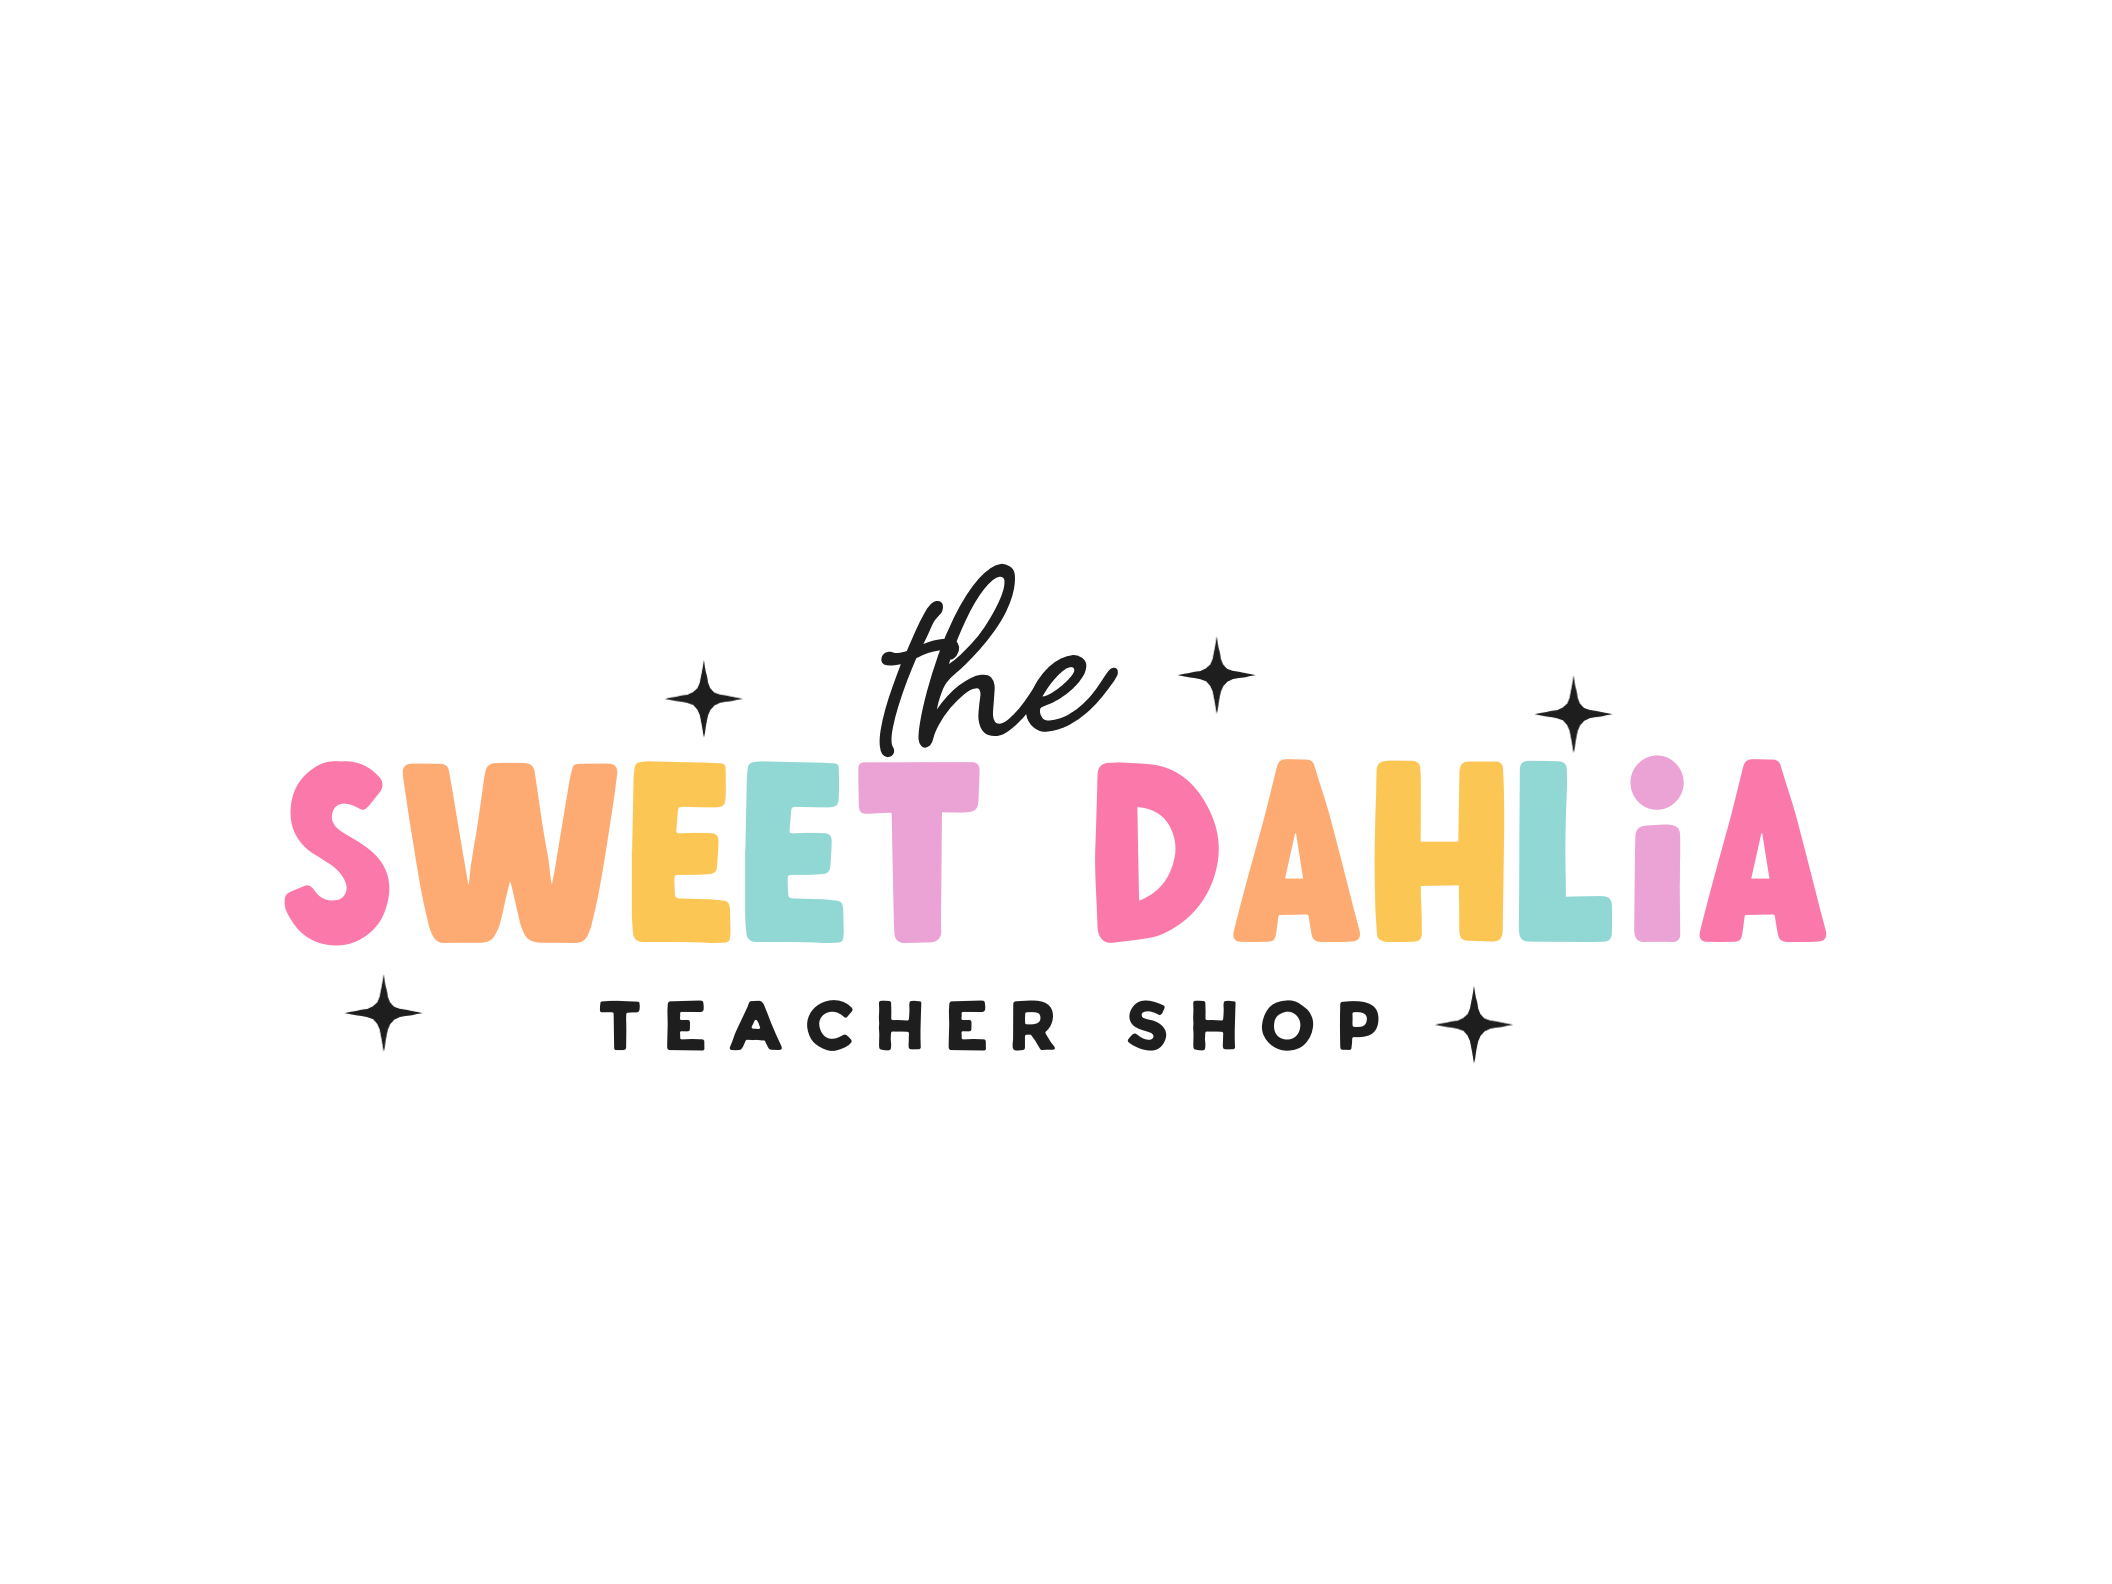 The Sweet Dahlia